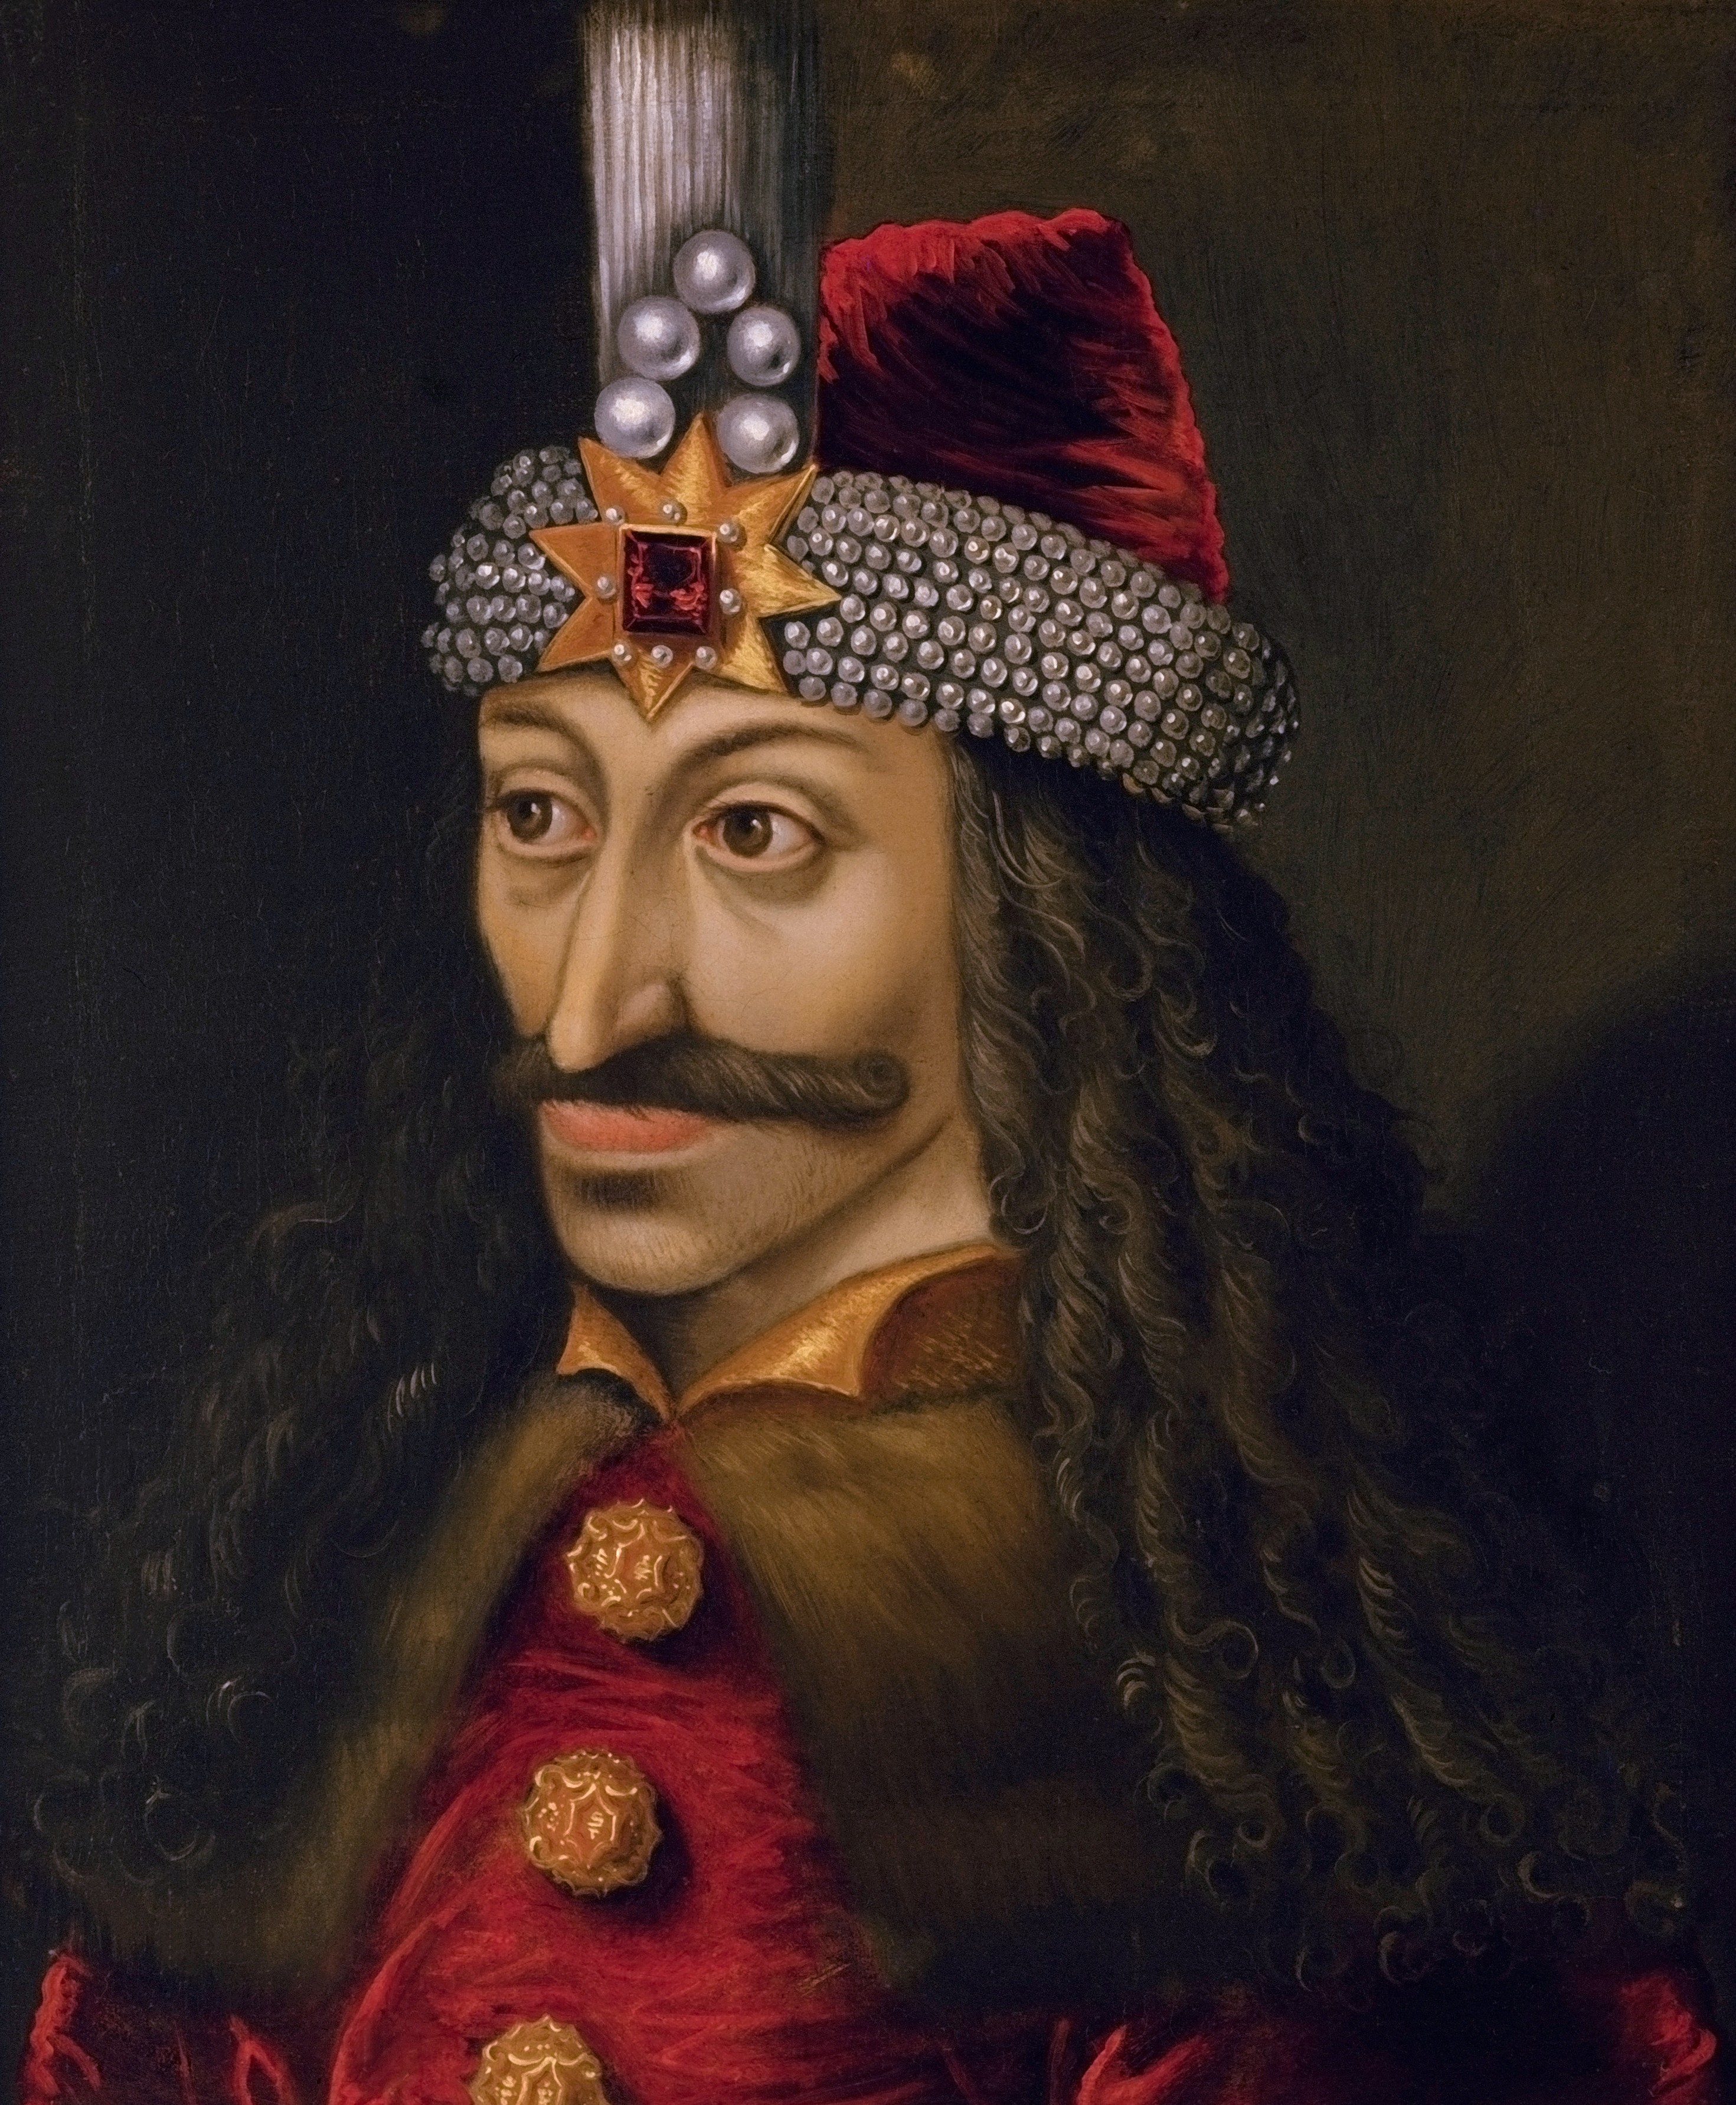 Vlad III (Vlad the Impaler) - Son of Dracul